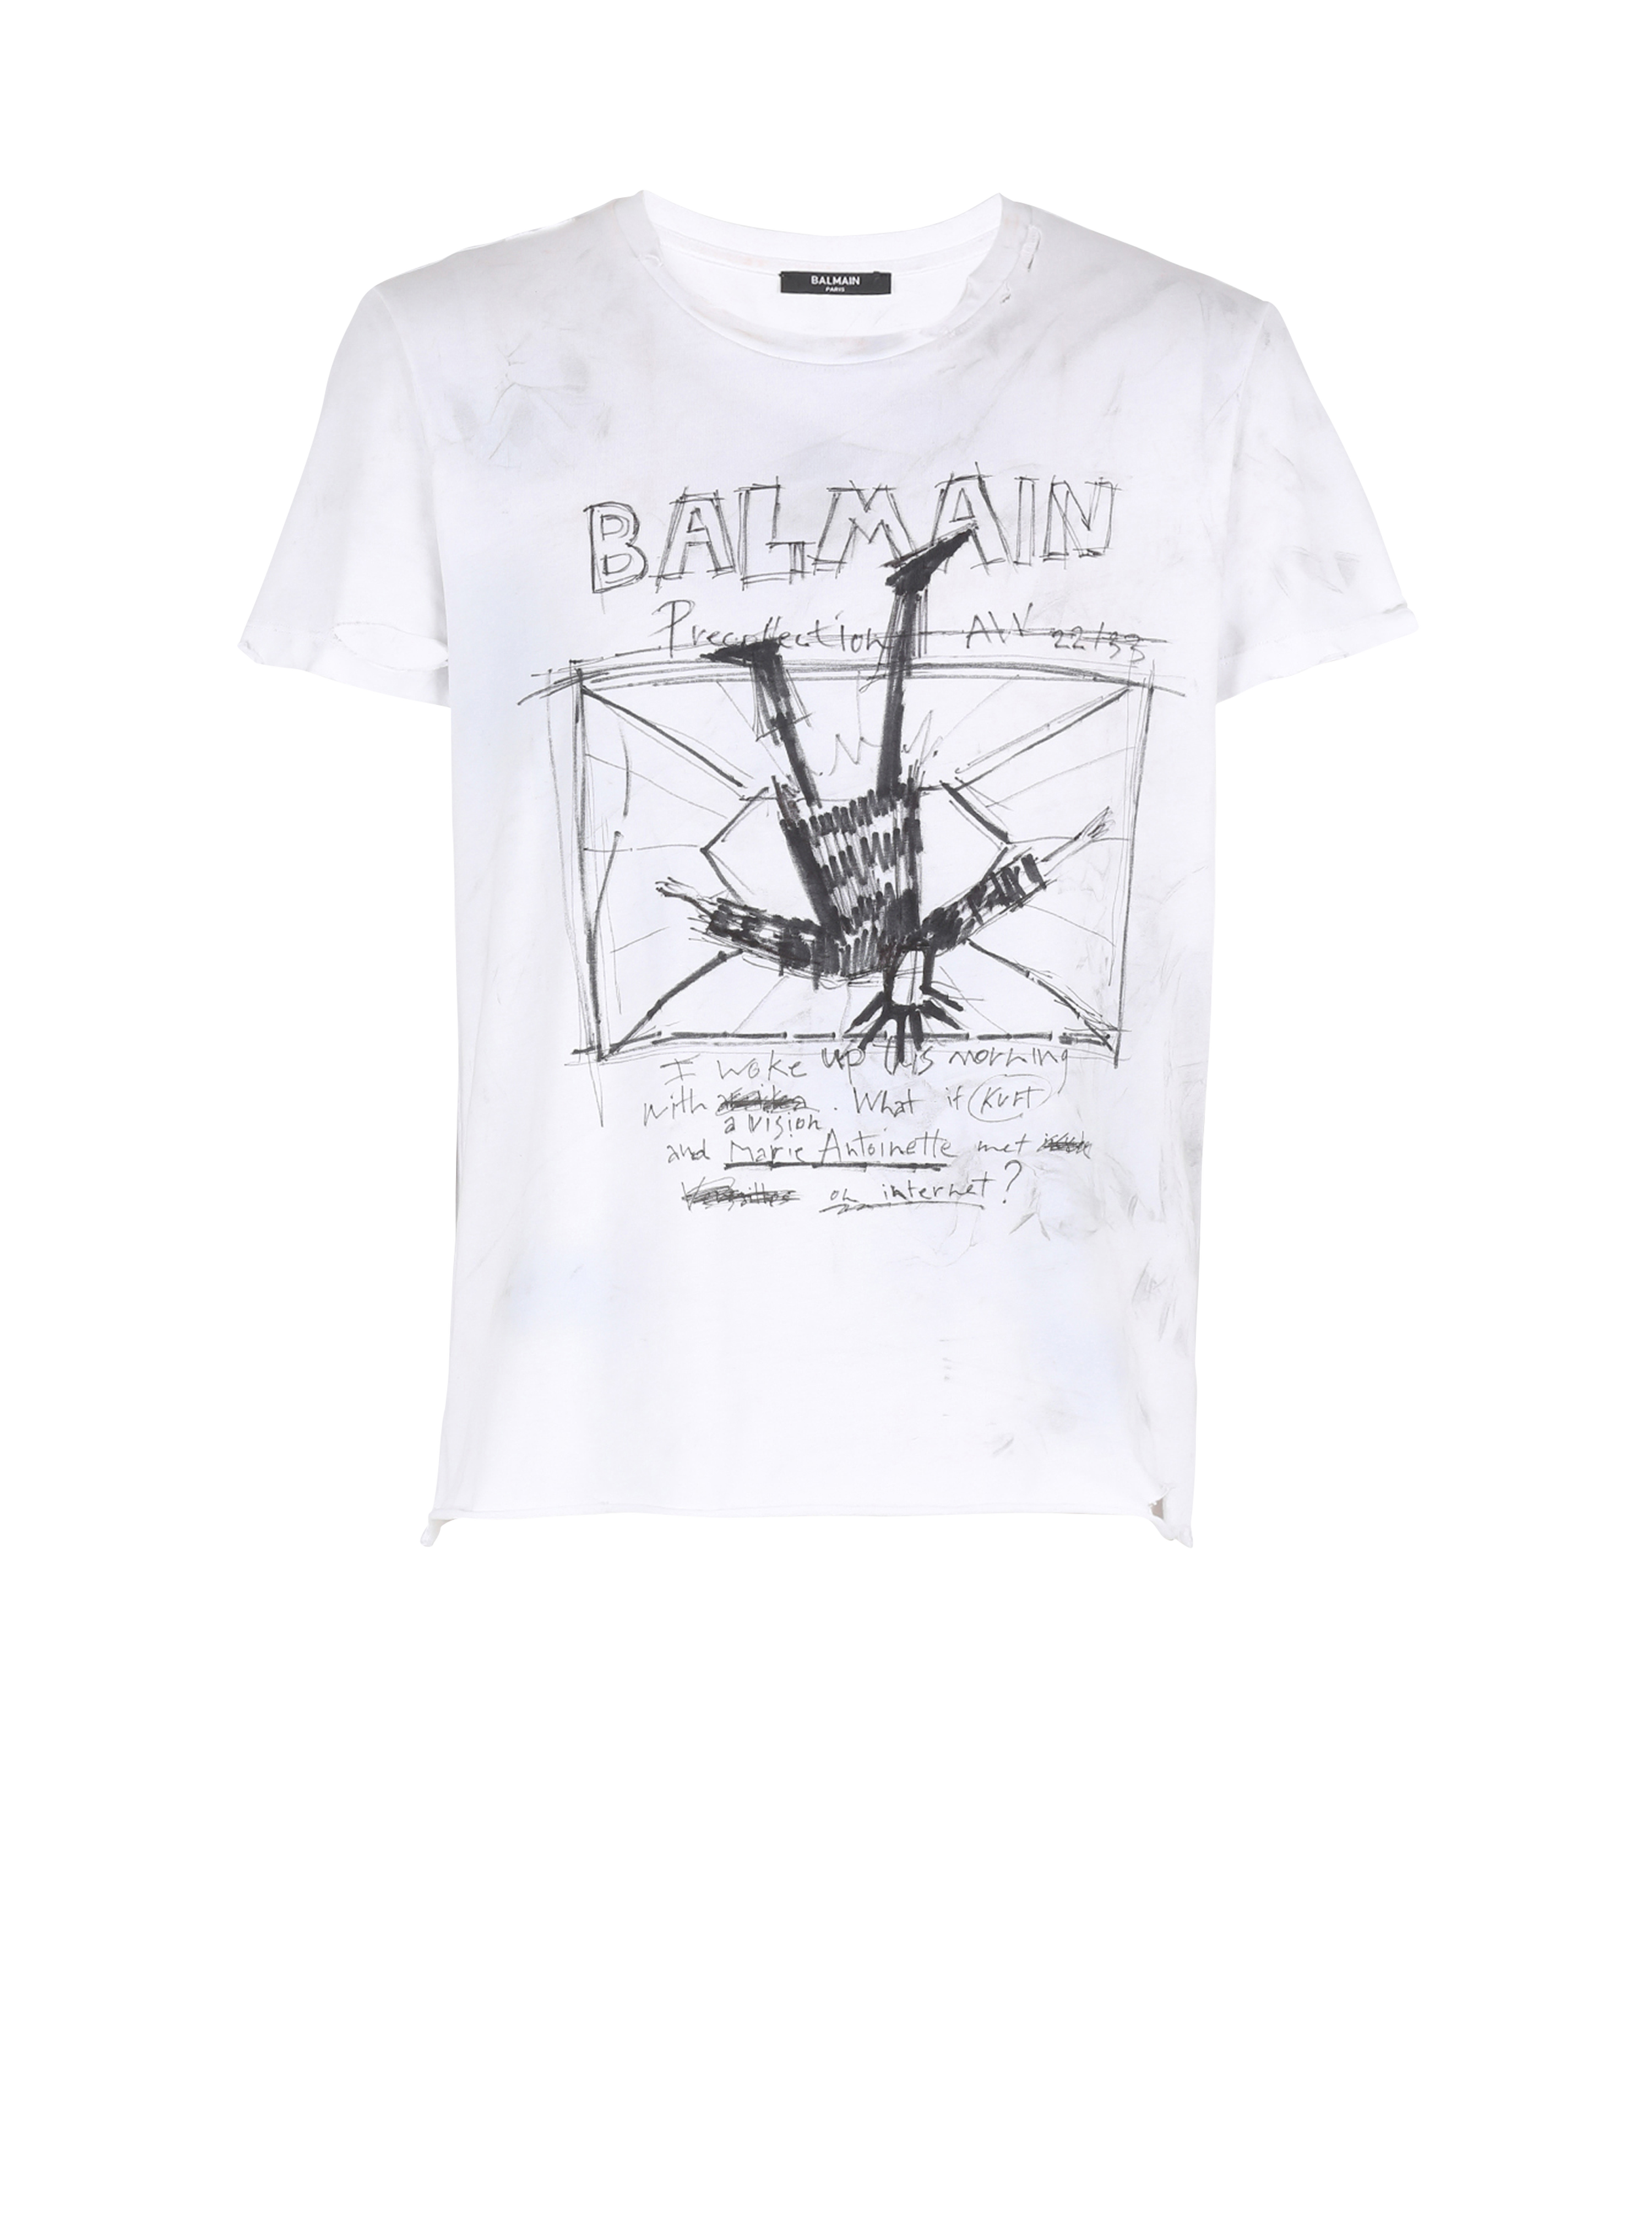 Unisex - Cotton T-shirt with motifs and Balmain logo print, black